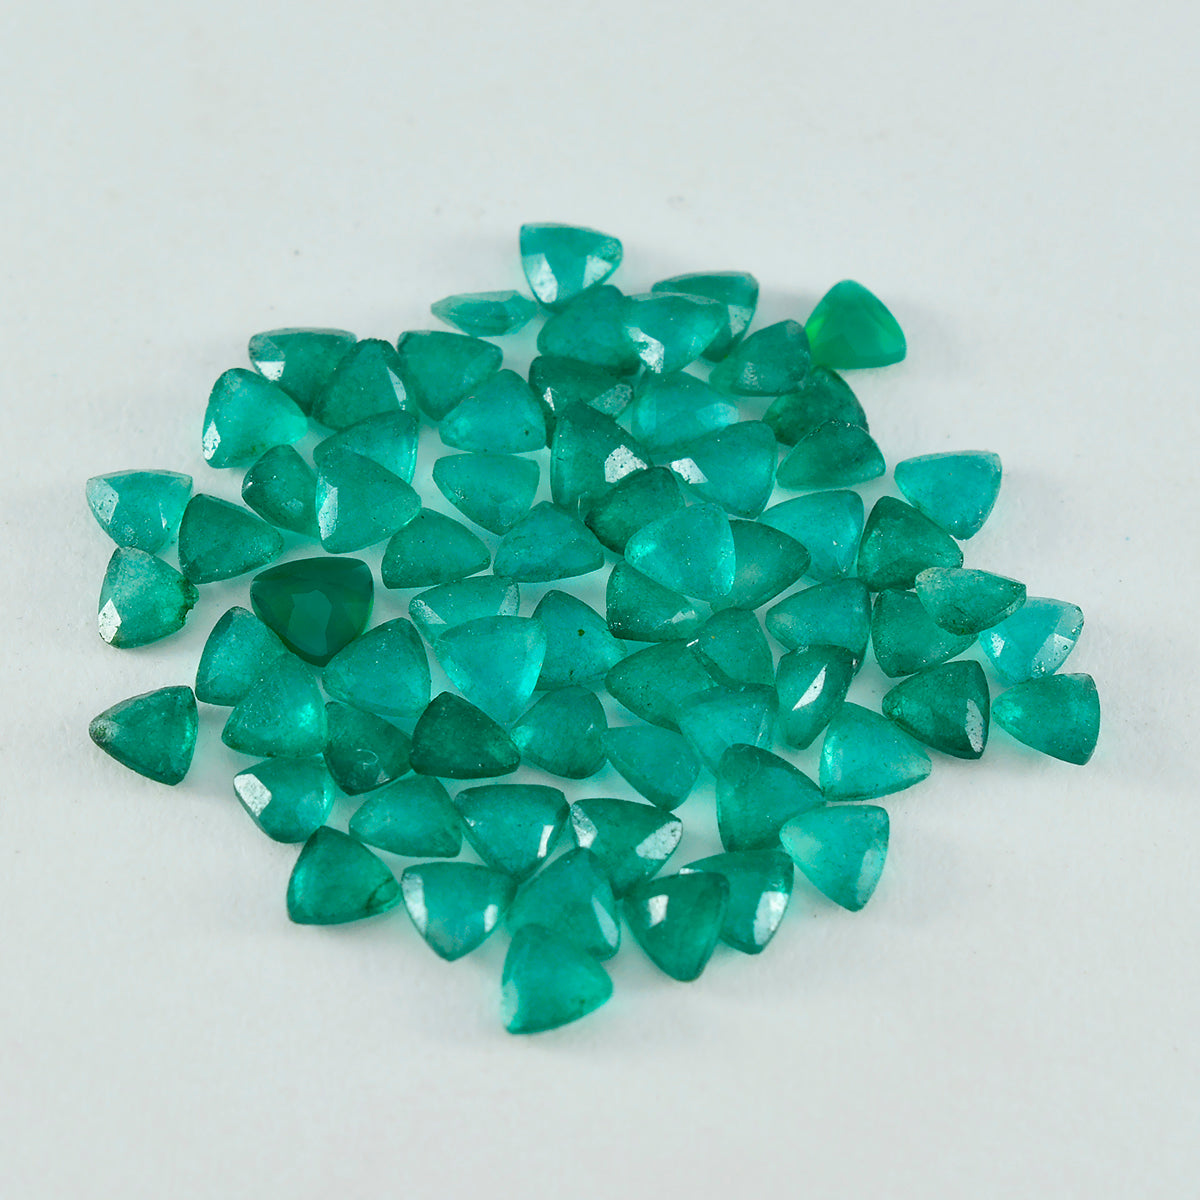 Riyogems 1PC Real Green Jasper Faceted 5x5 mm Trillion Shape A+1 Quality Gemstone